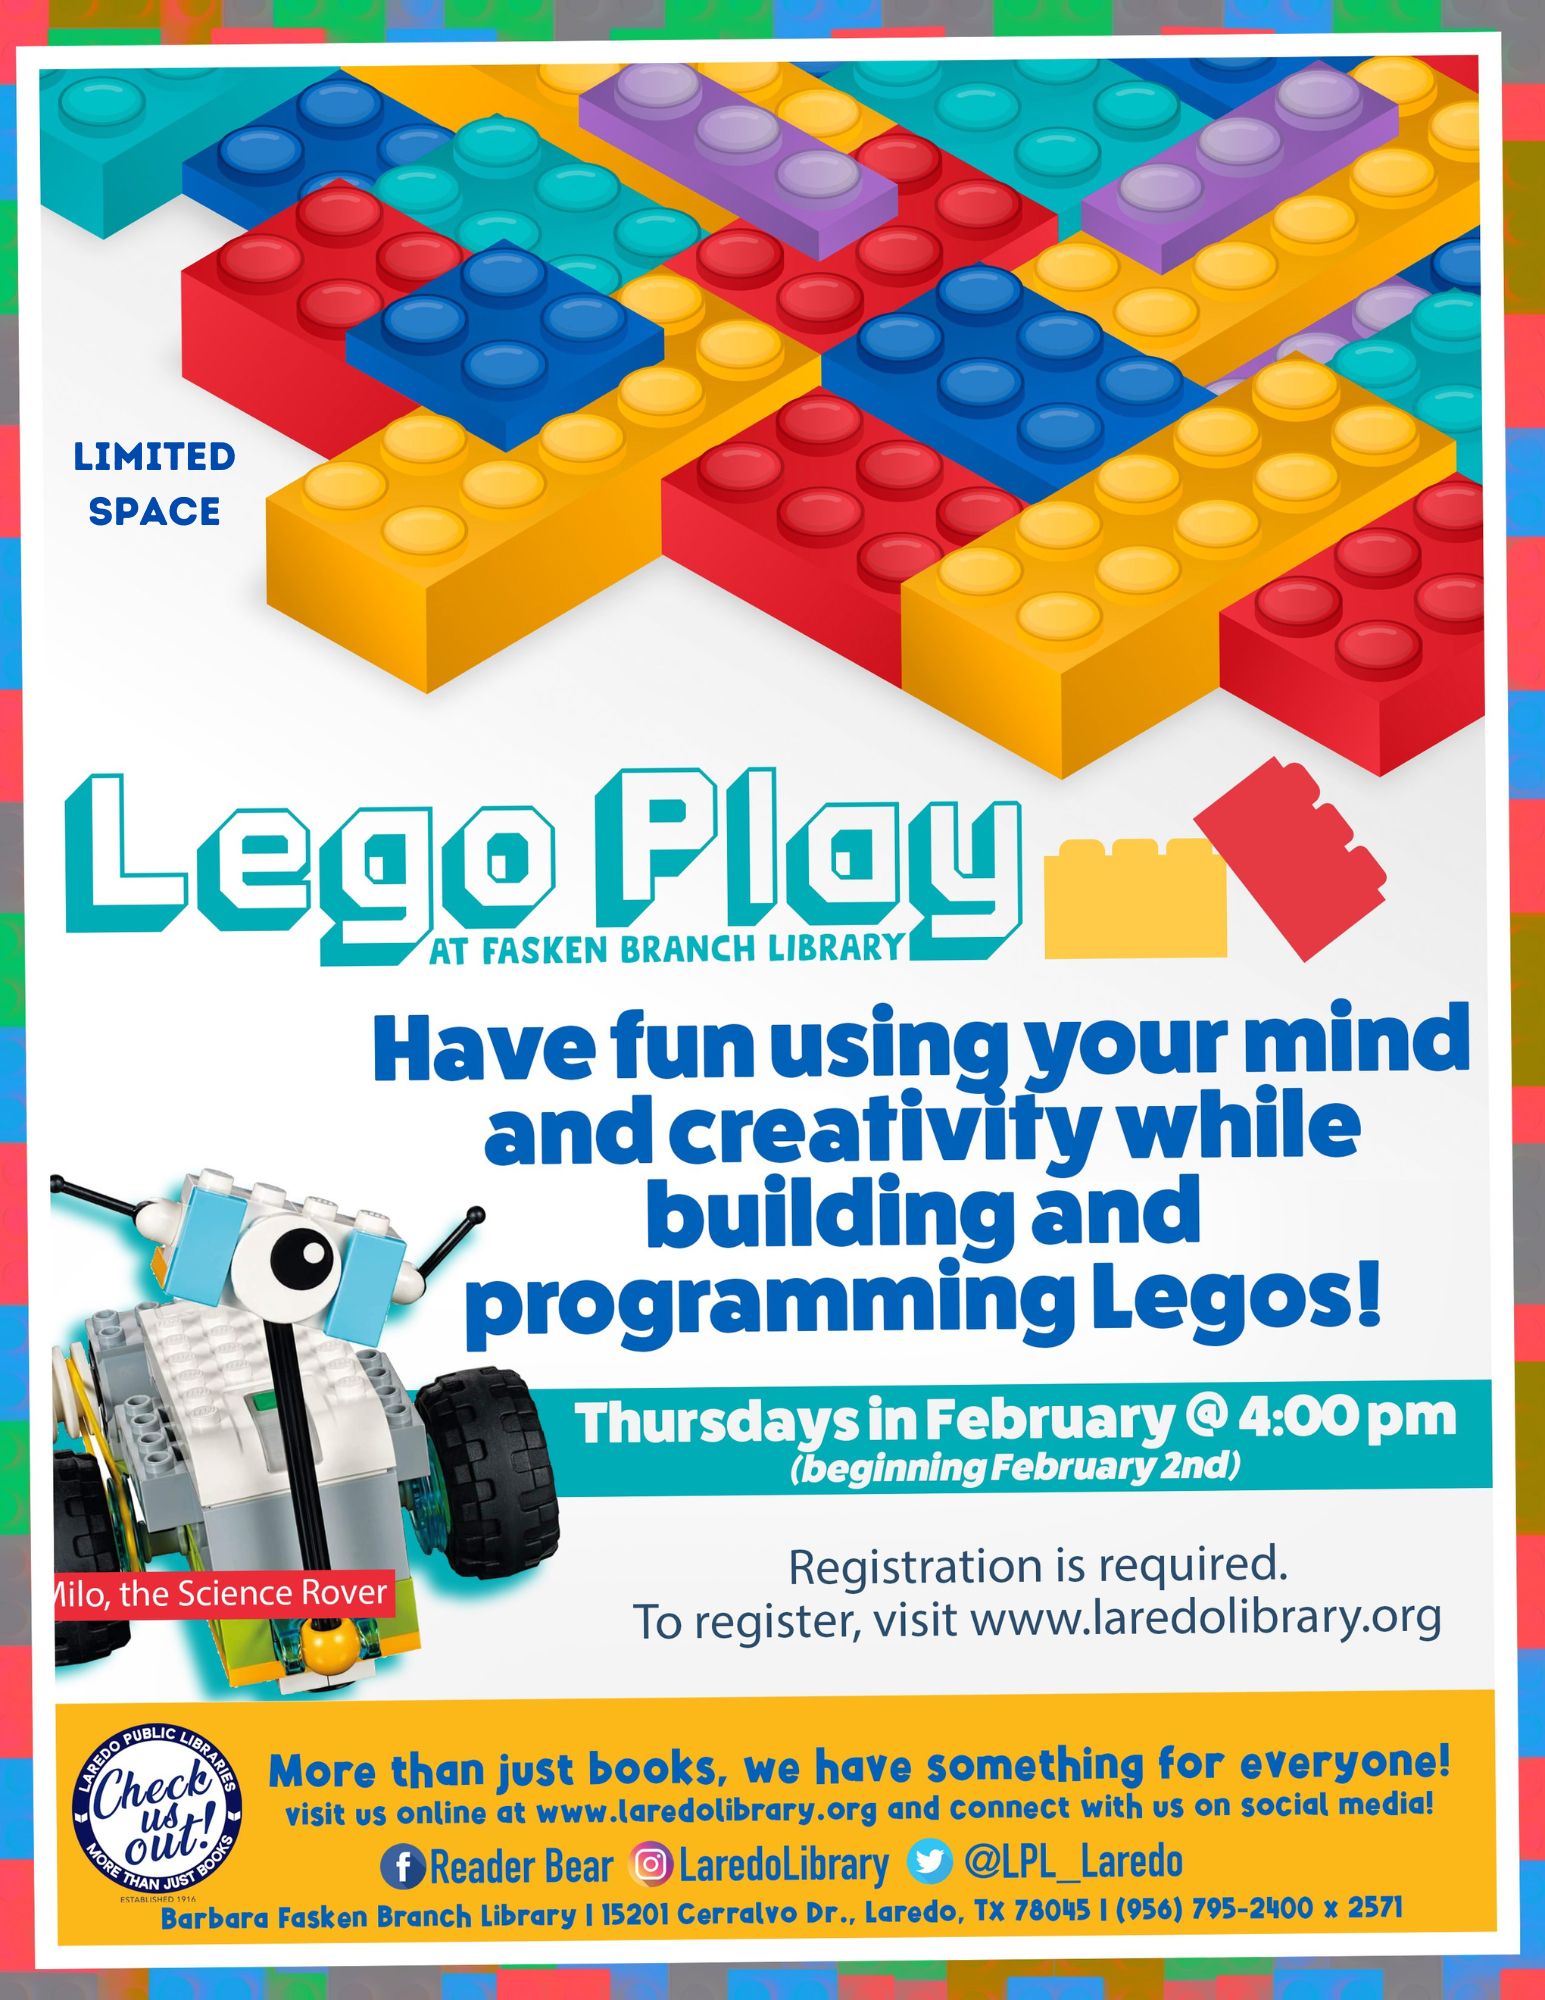 LEGO Play Registration Begins! @Fasken Library